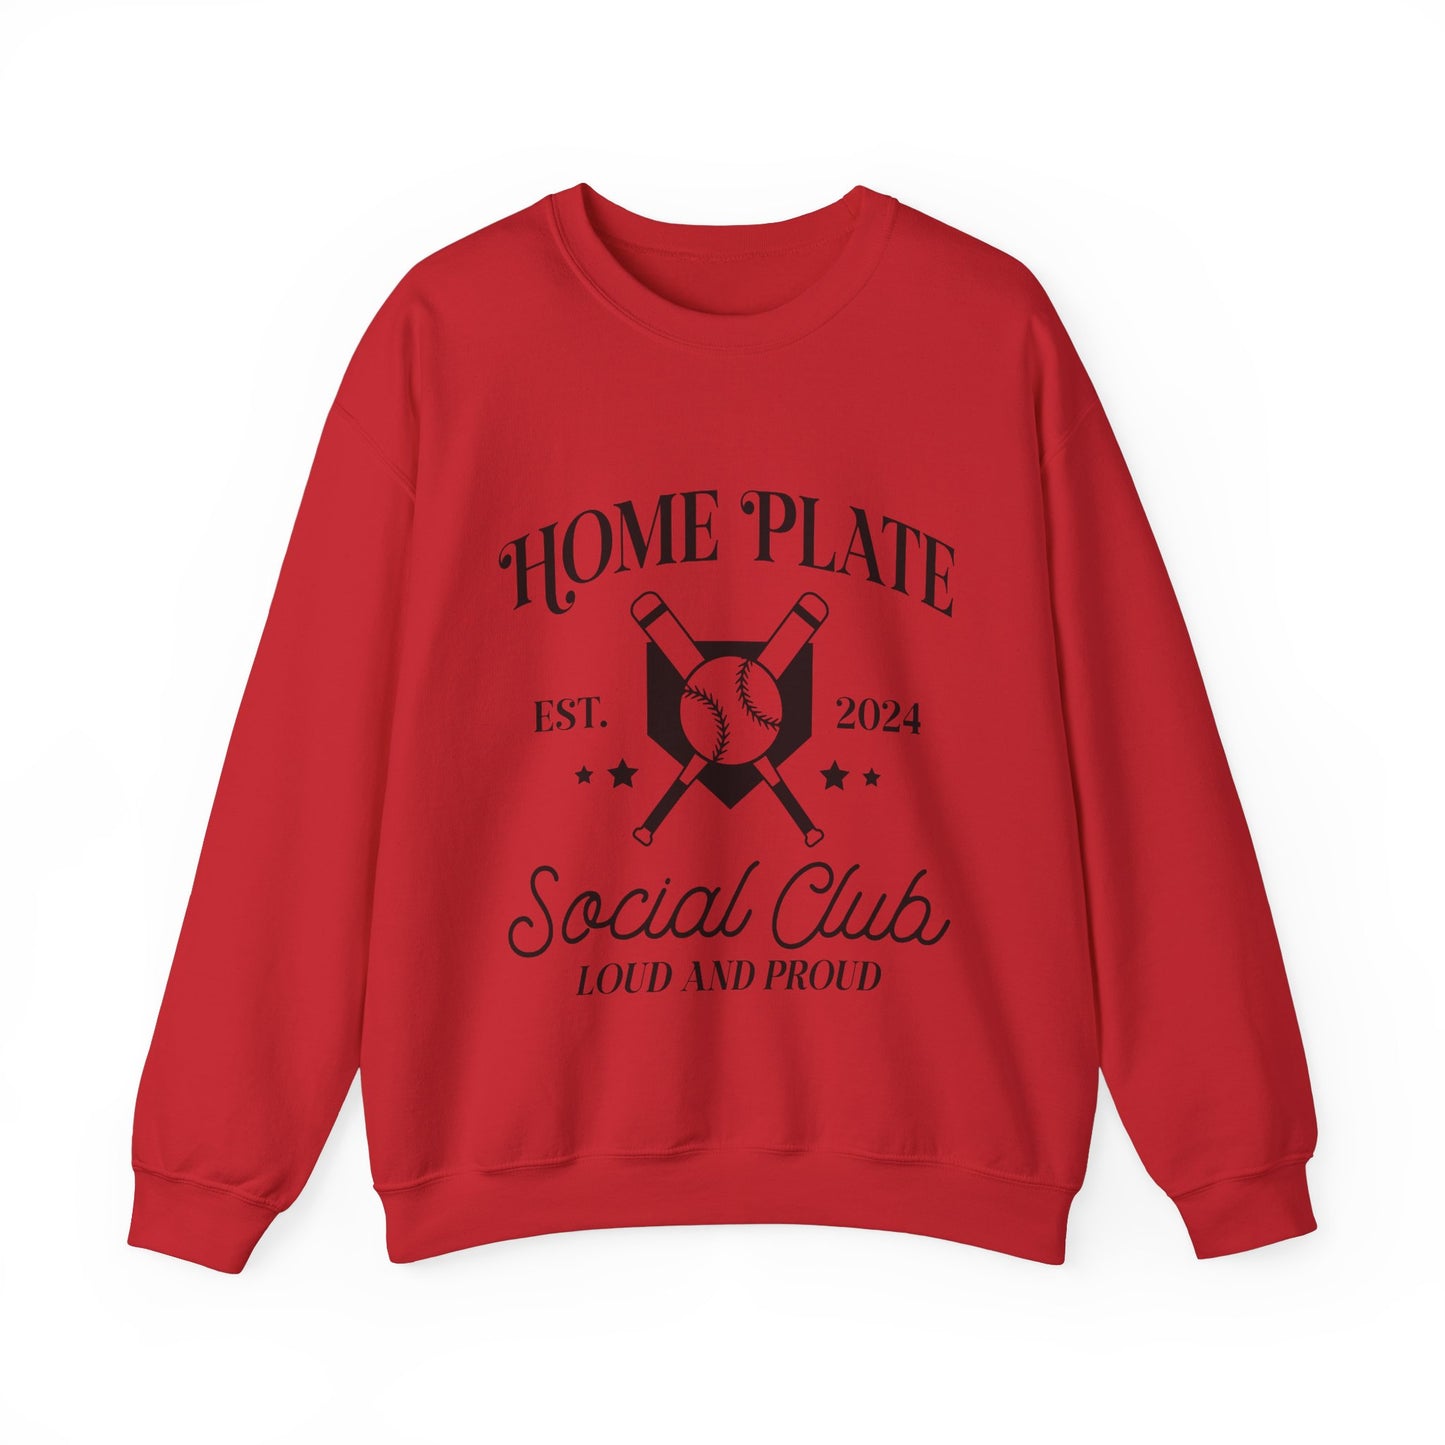 Home Plate Social Club Women's Crewneck Sweatshirt Baseball Softball Tball